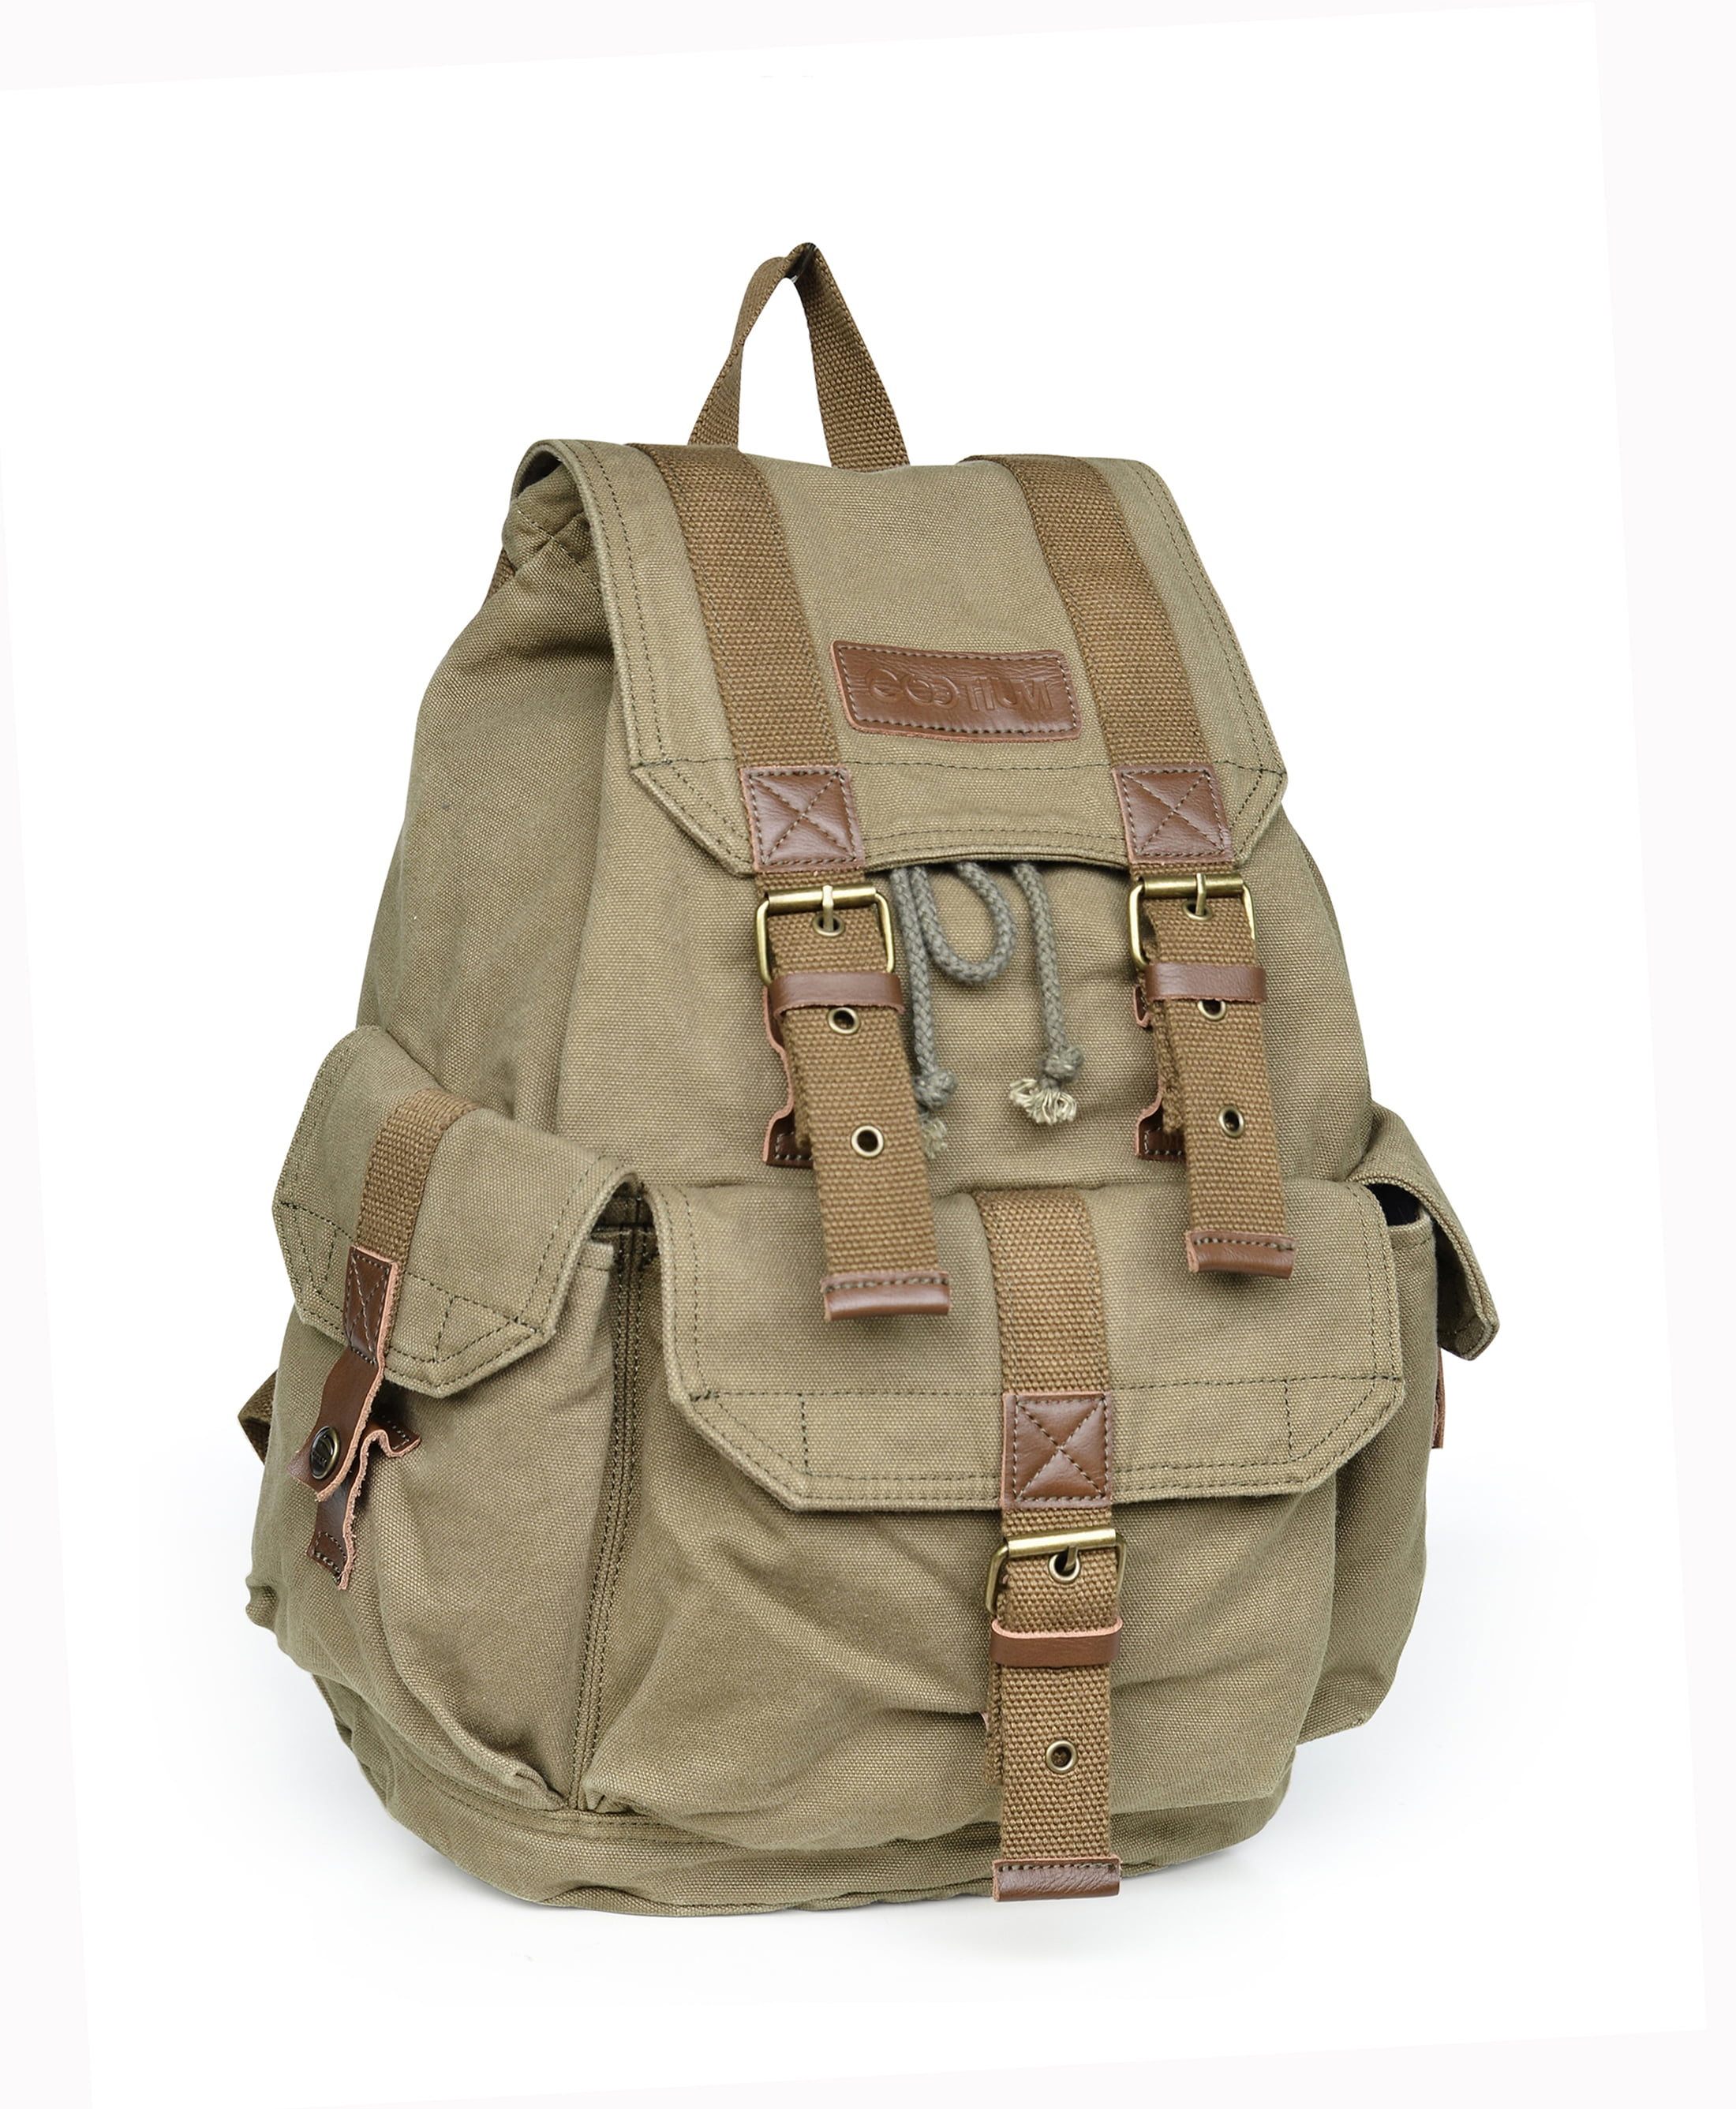 Gootium Vintage Canvas Backpack, Unisex Casual Classic Rucksack, Army ...